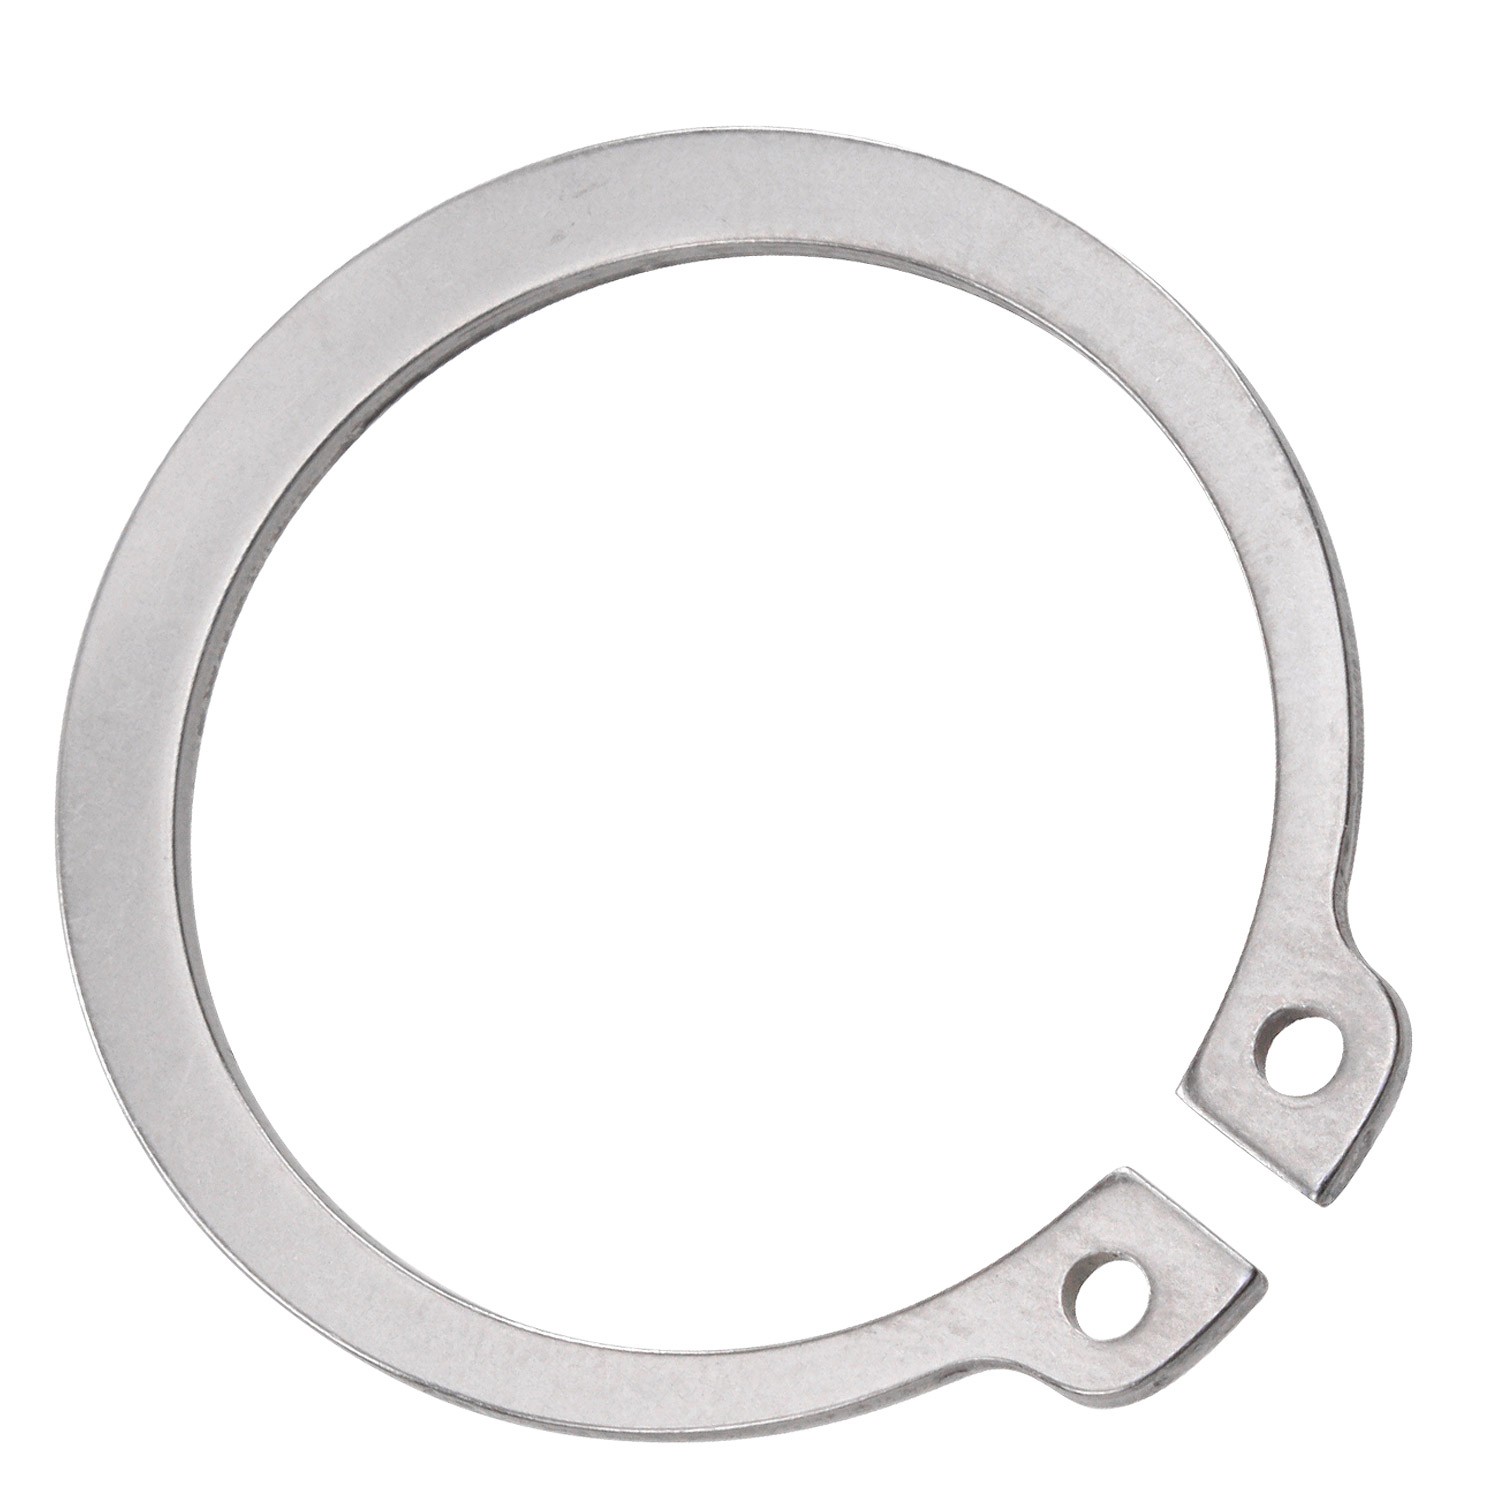 Кольцо стопорное наружное 15х1 DIN 471, нержавеющая сталь A4 - фото